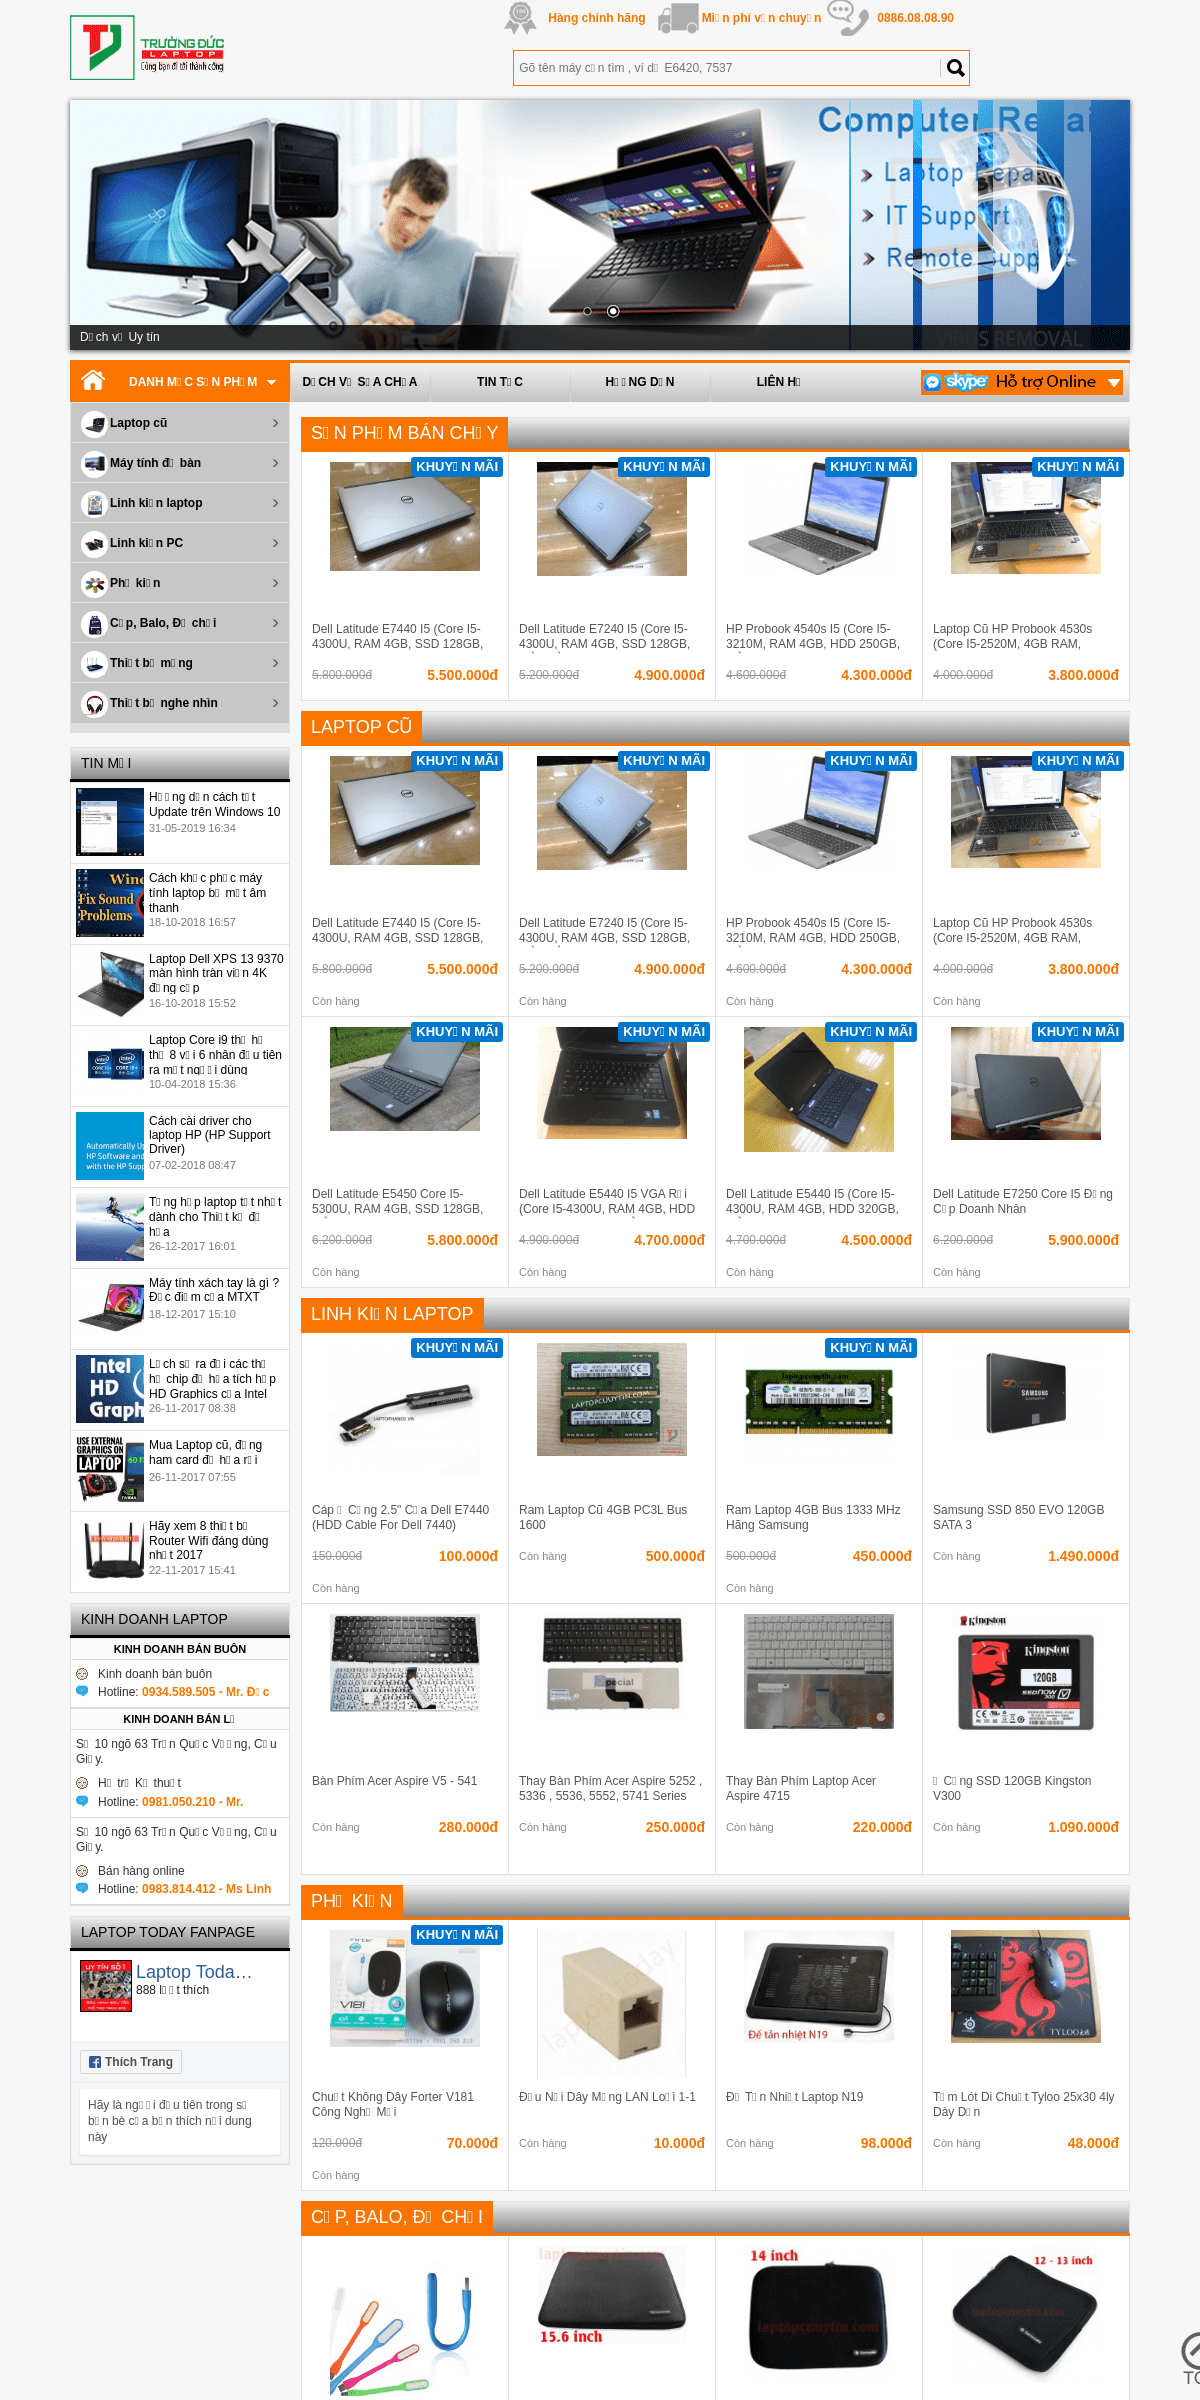 A complete backup of laptopcuuytin.com